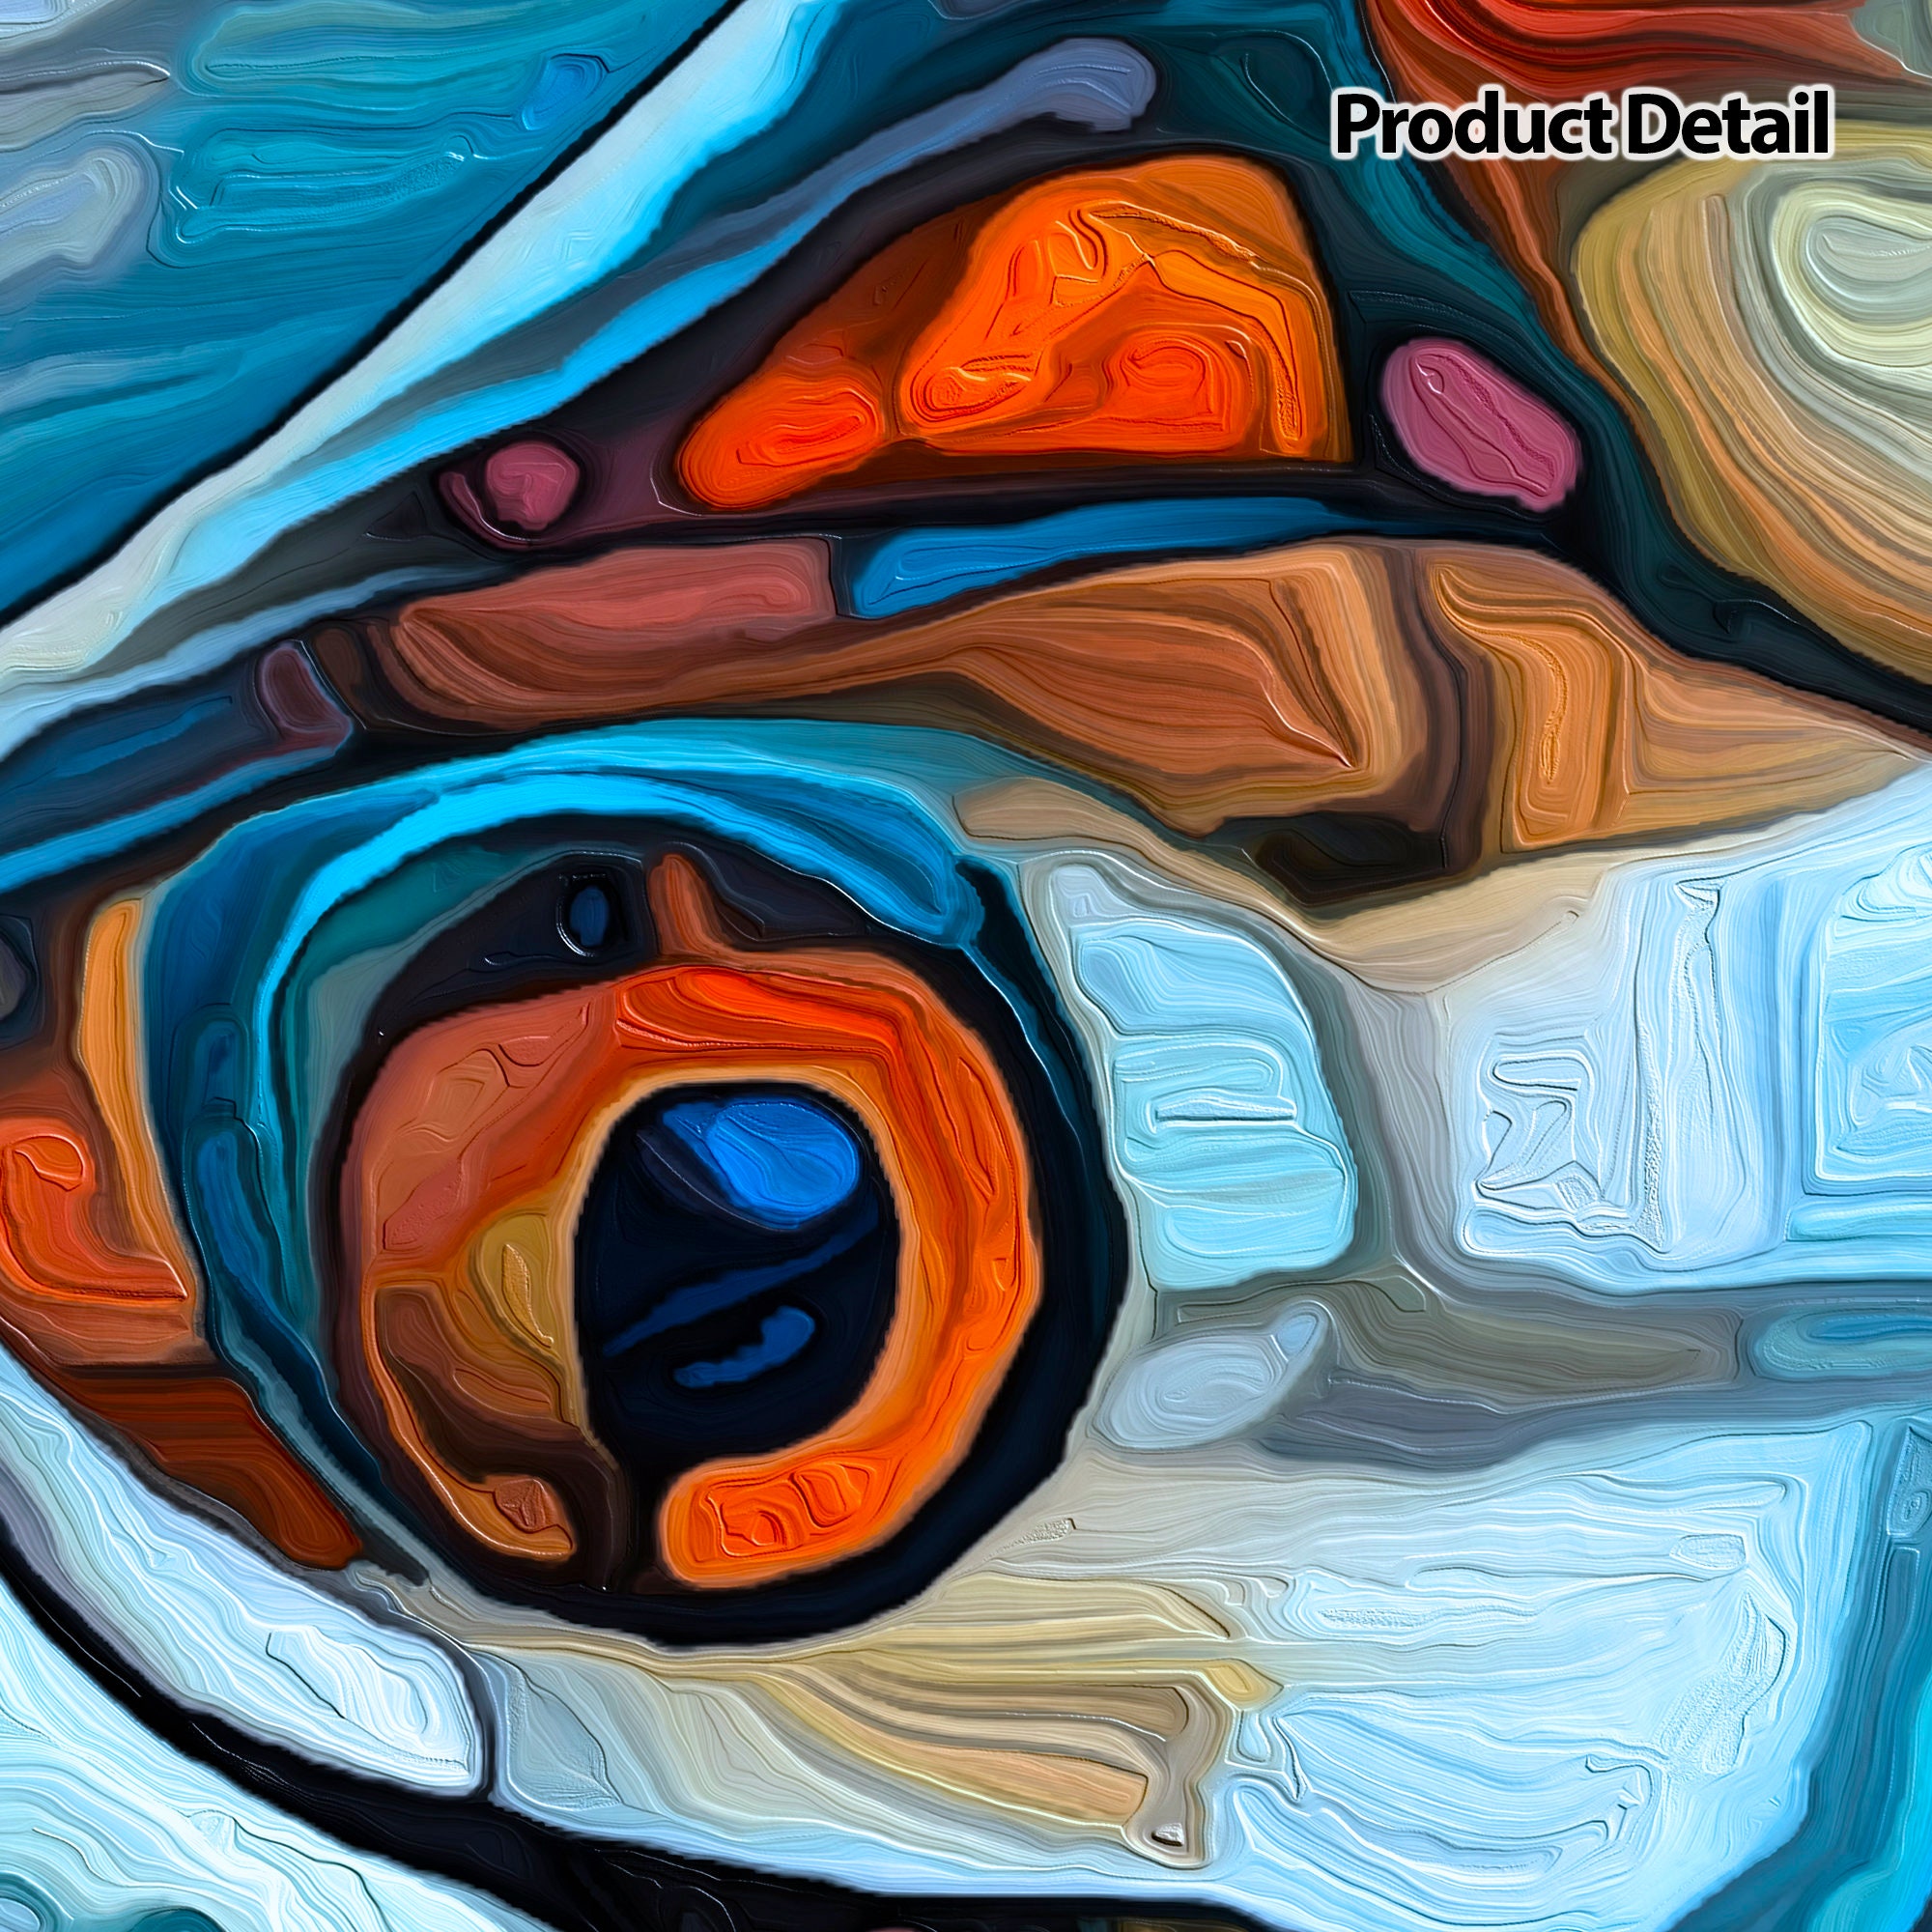 TARPON Fish Inshore Fine Art Canvas Giclee Print Florida